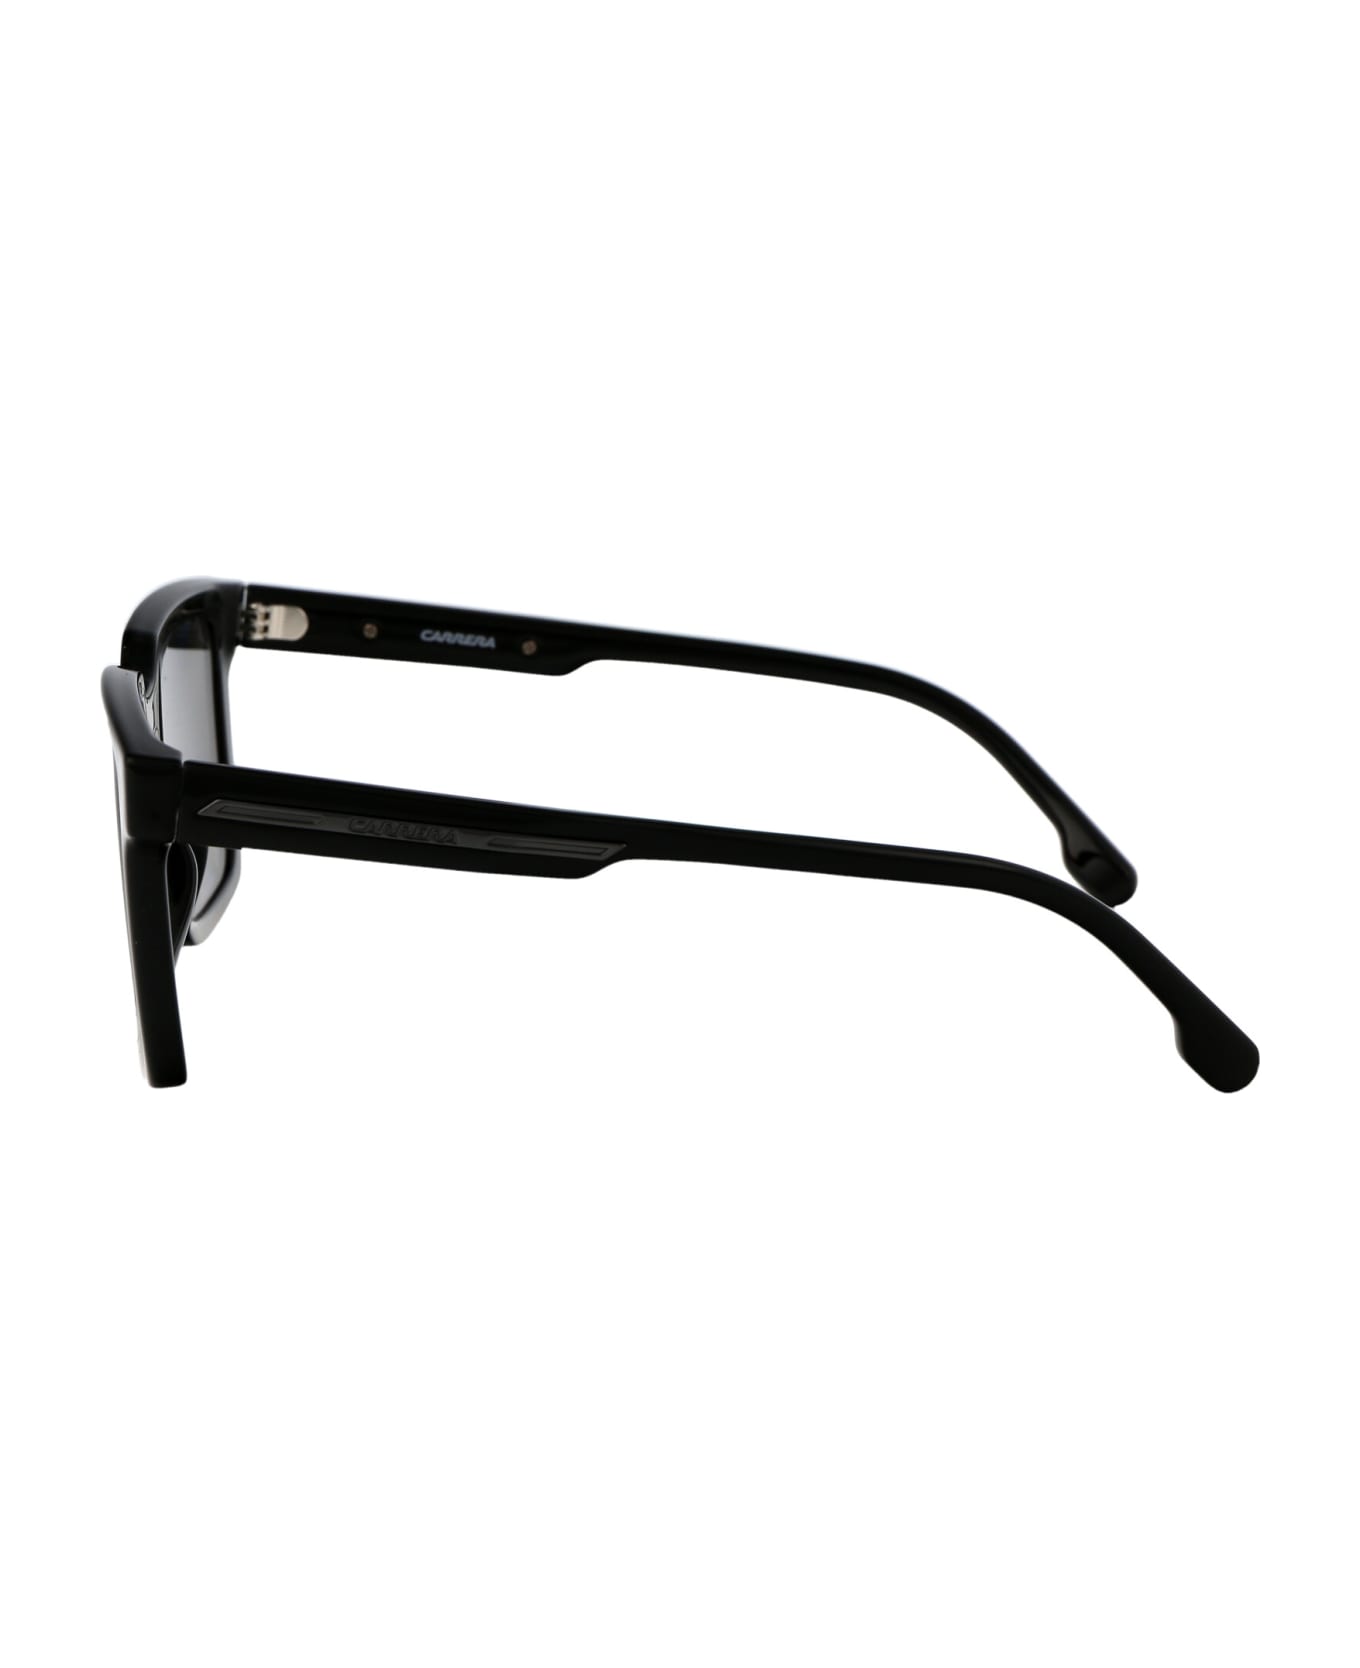 Carrera Victory C 02/s Sunglasses - 807M9 BLACK